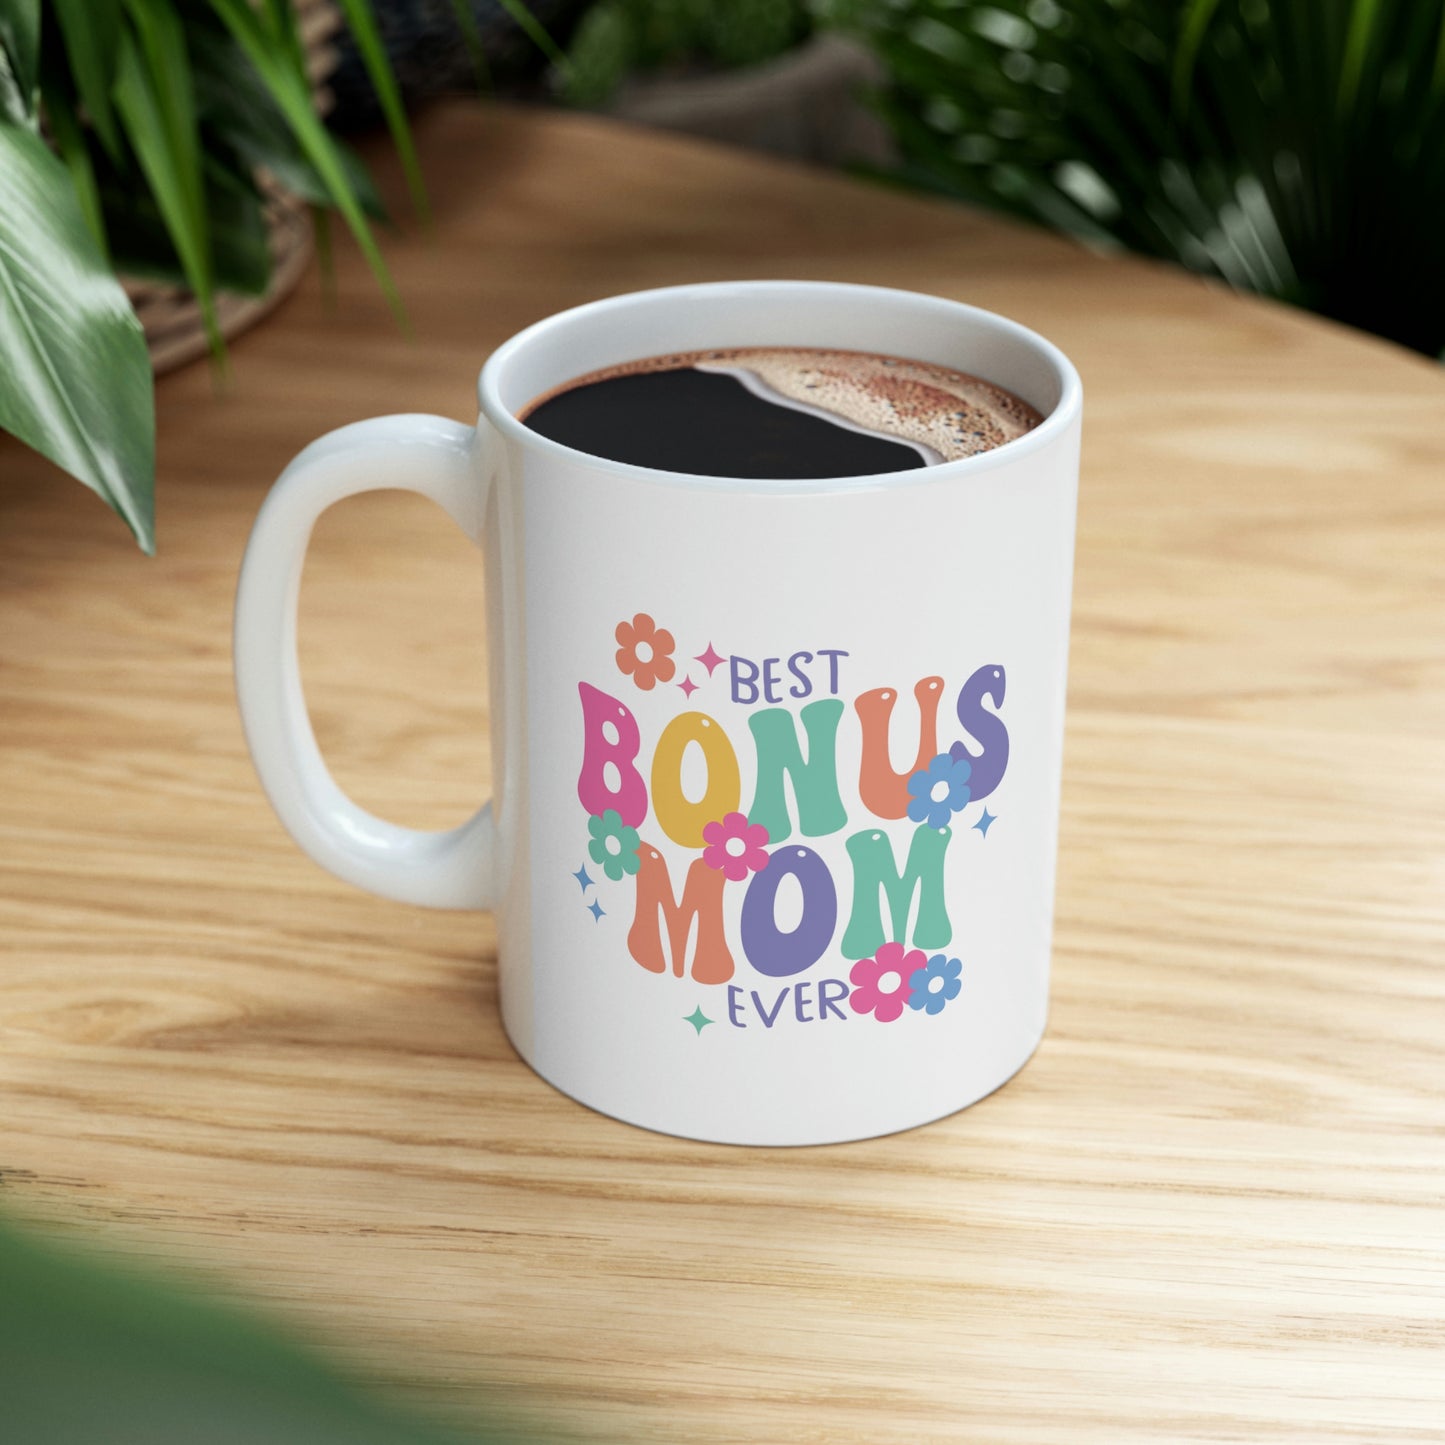 Best Bonus Mom Ever Ceramic Mug 11oz, Mothers Day Gift